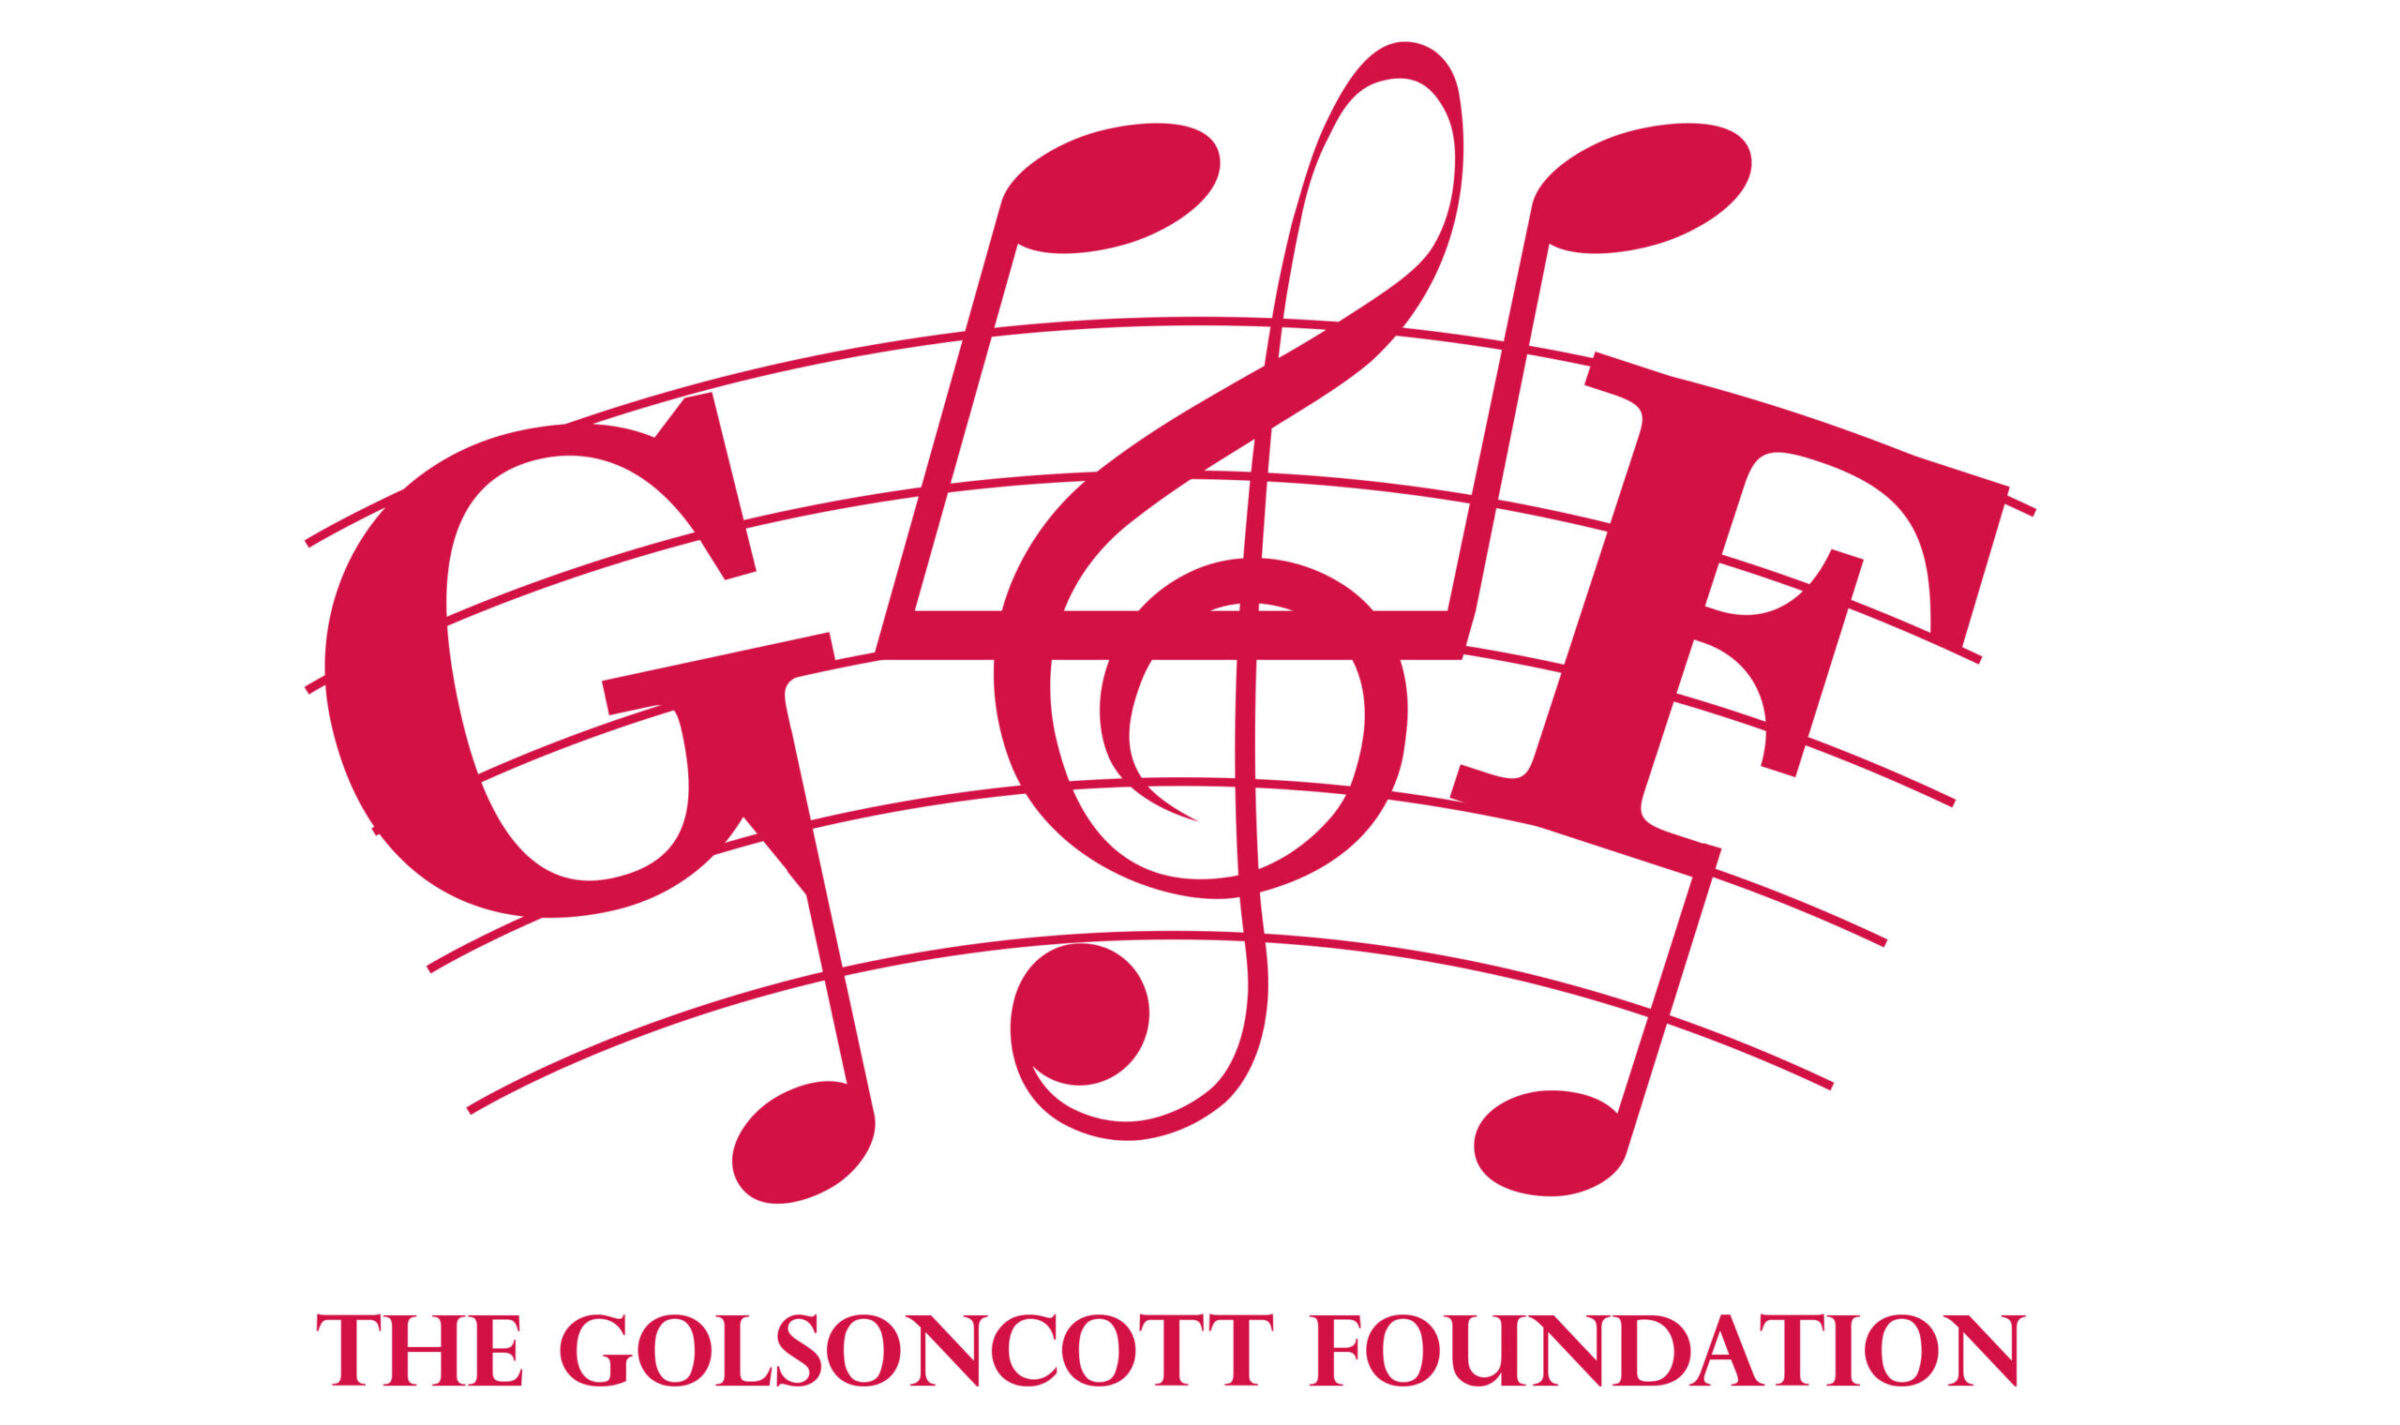 https://www.artsung.com/wp-content/uploads/2021/12/Golsoncott-image-logo-scaled-e1639596379806.jpg